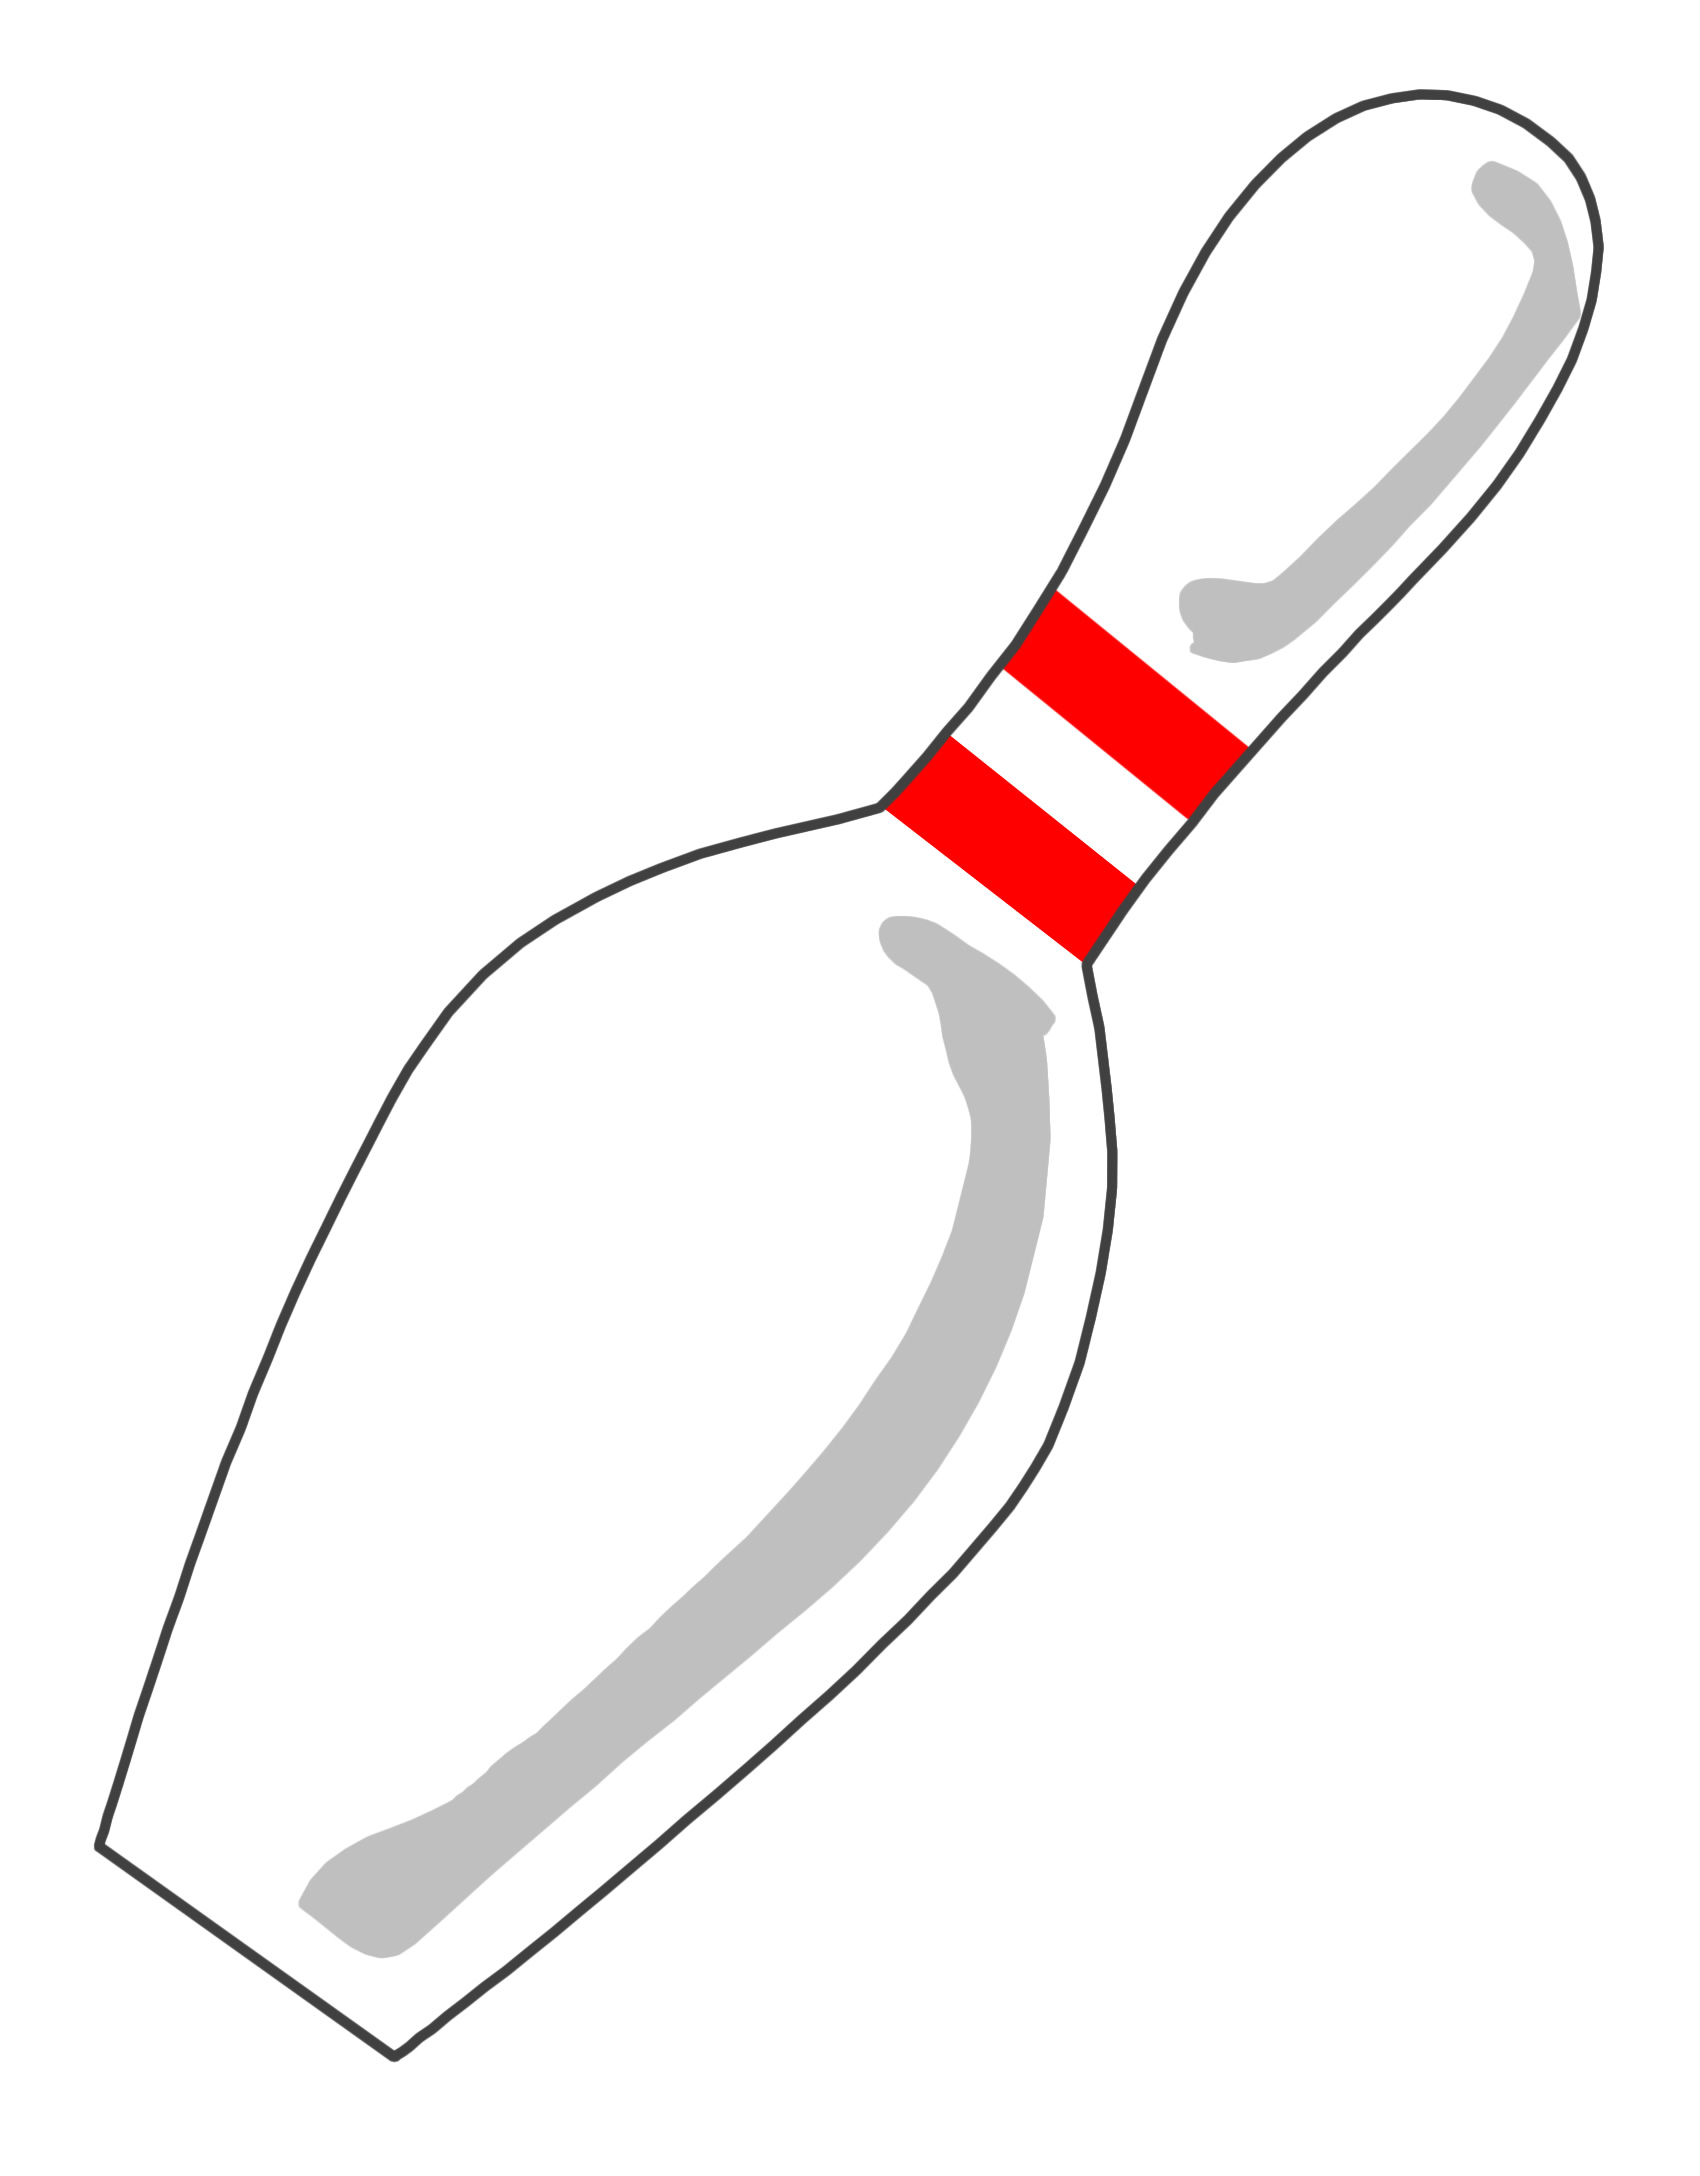 Bowling Pin Graphic